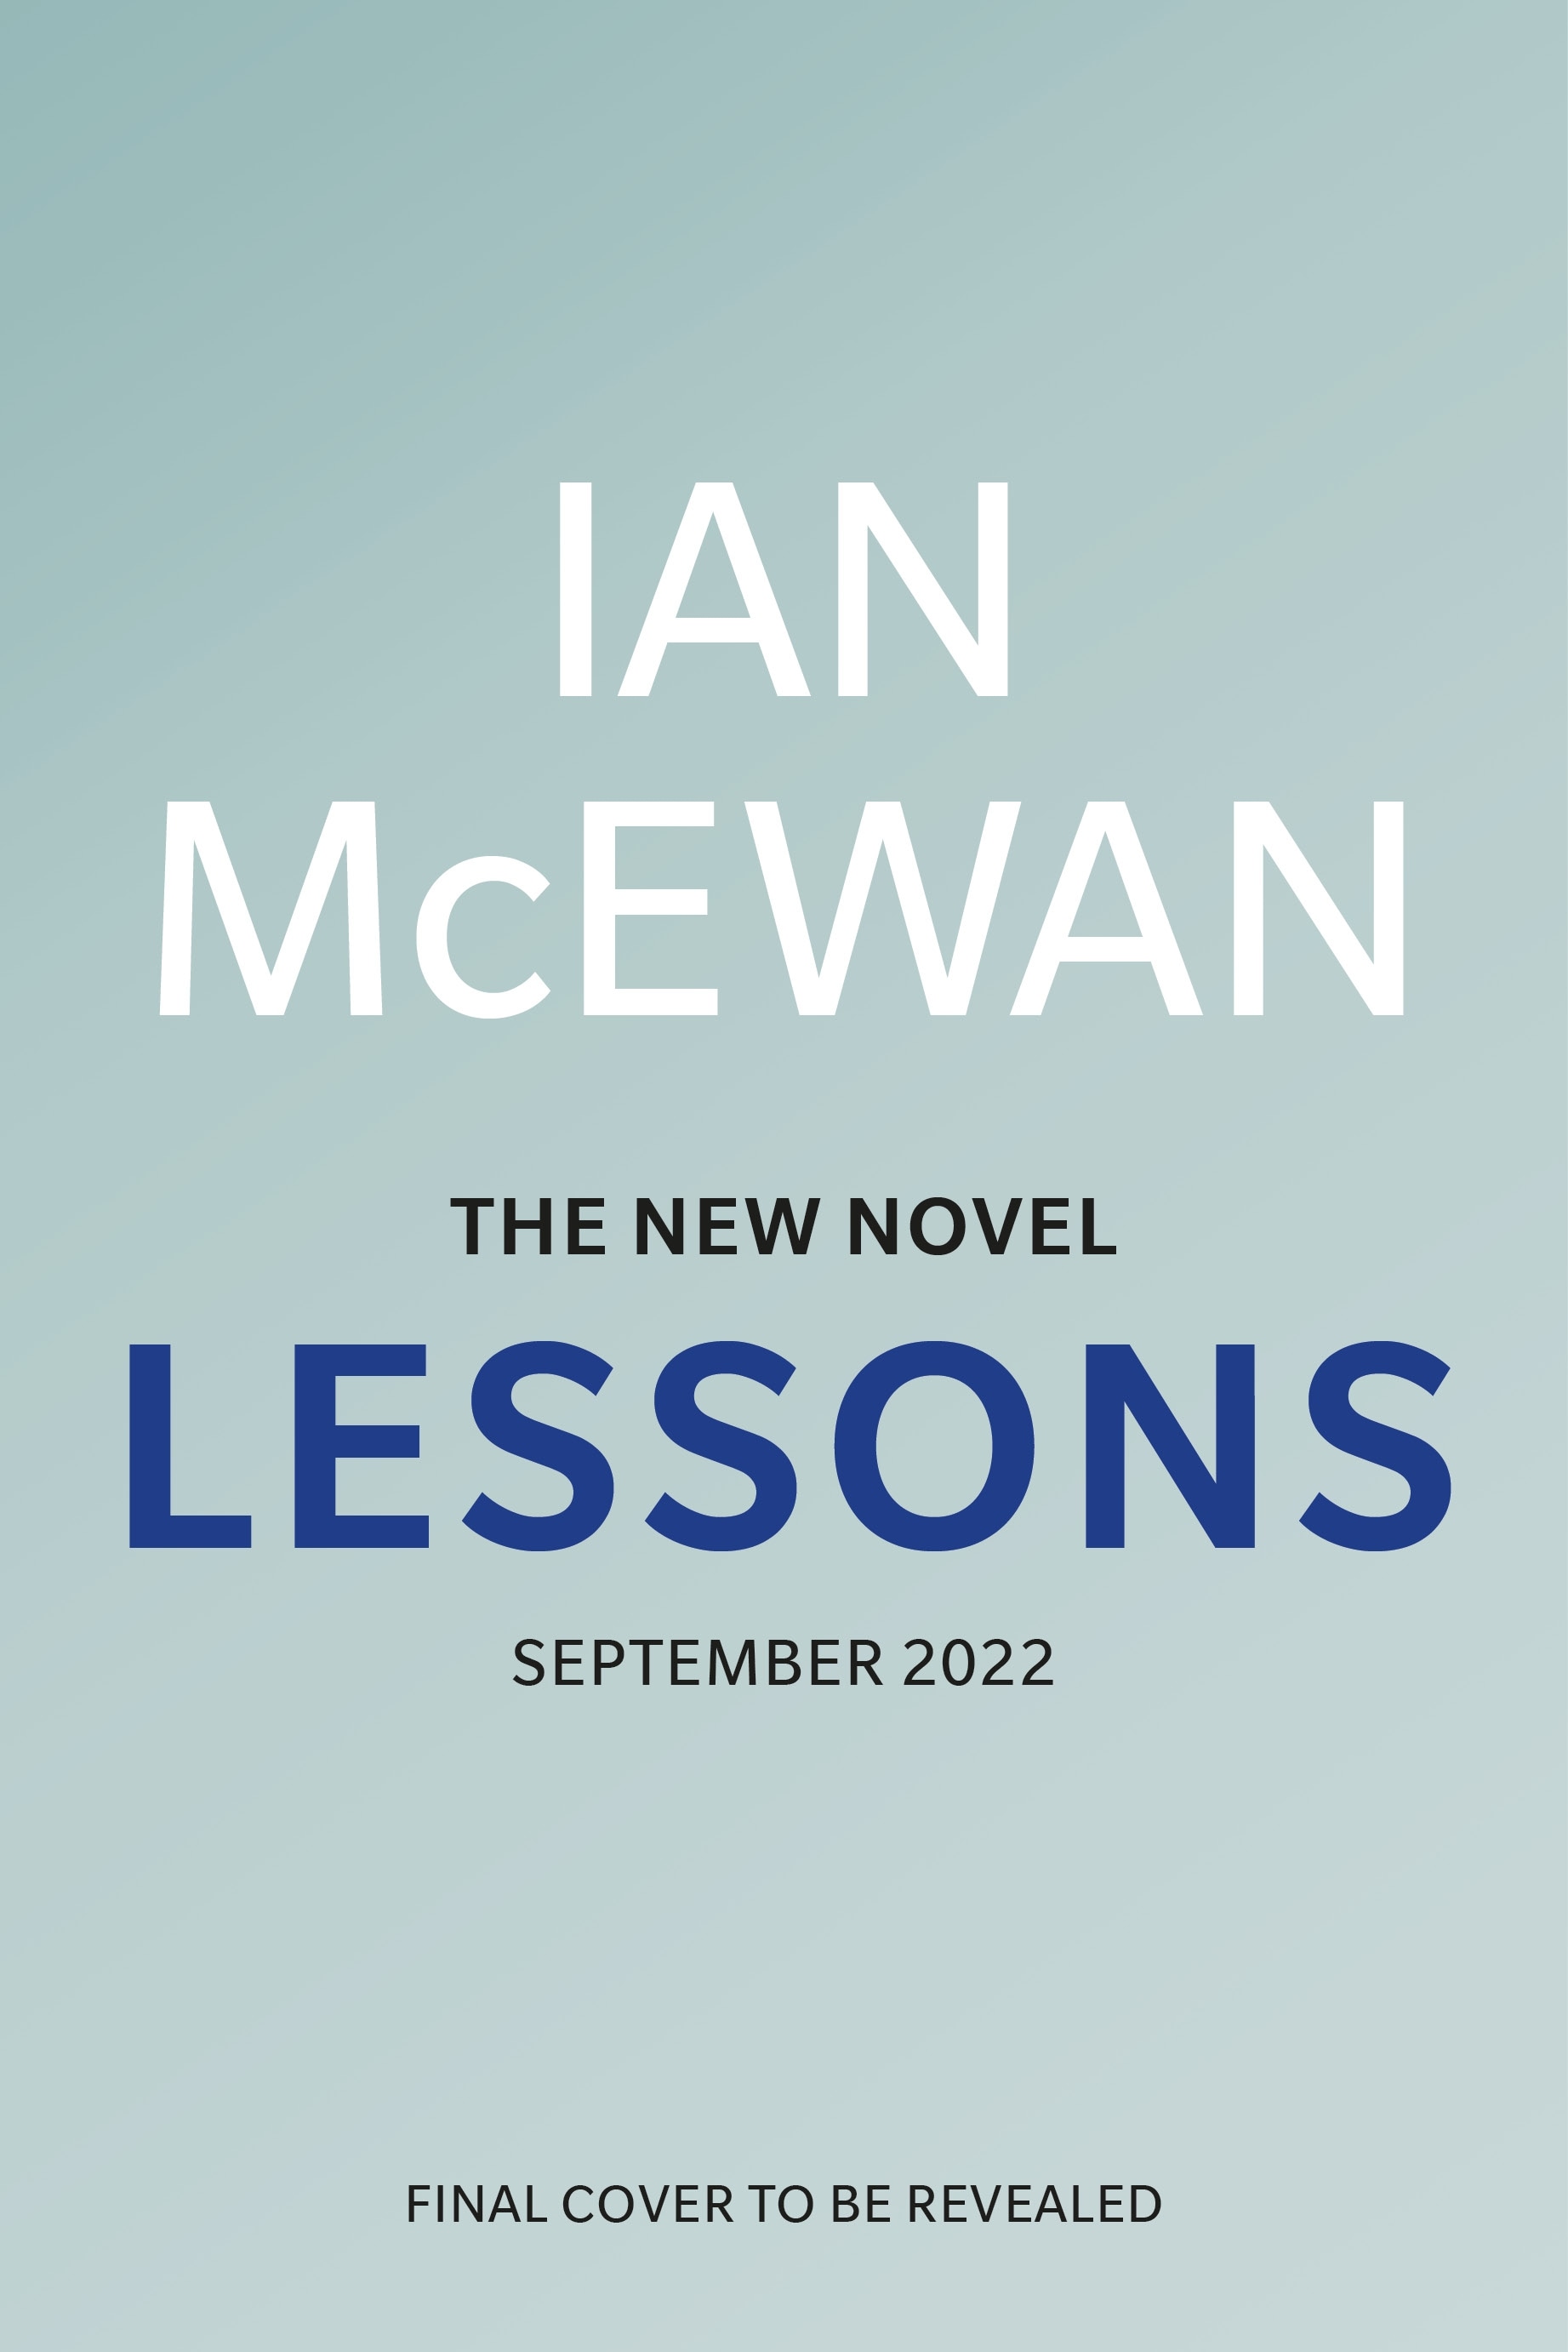 Book “Lessons” by Ian McEwan — September 13, 2022